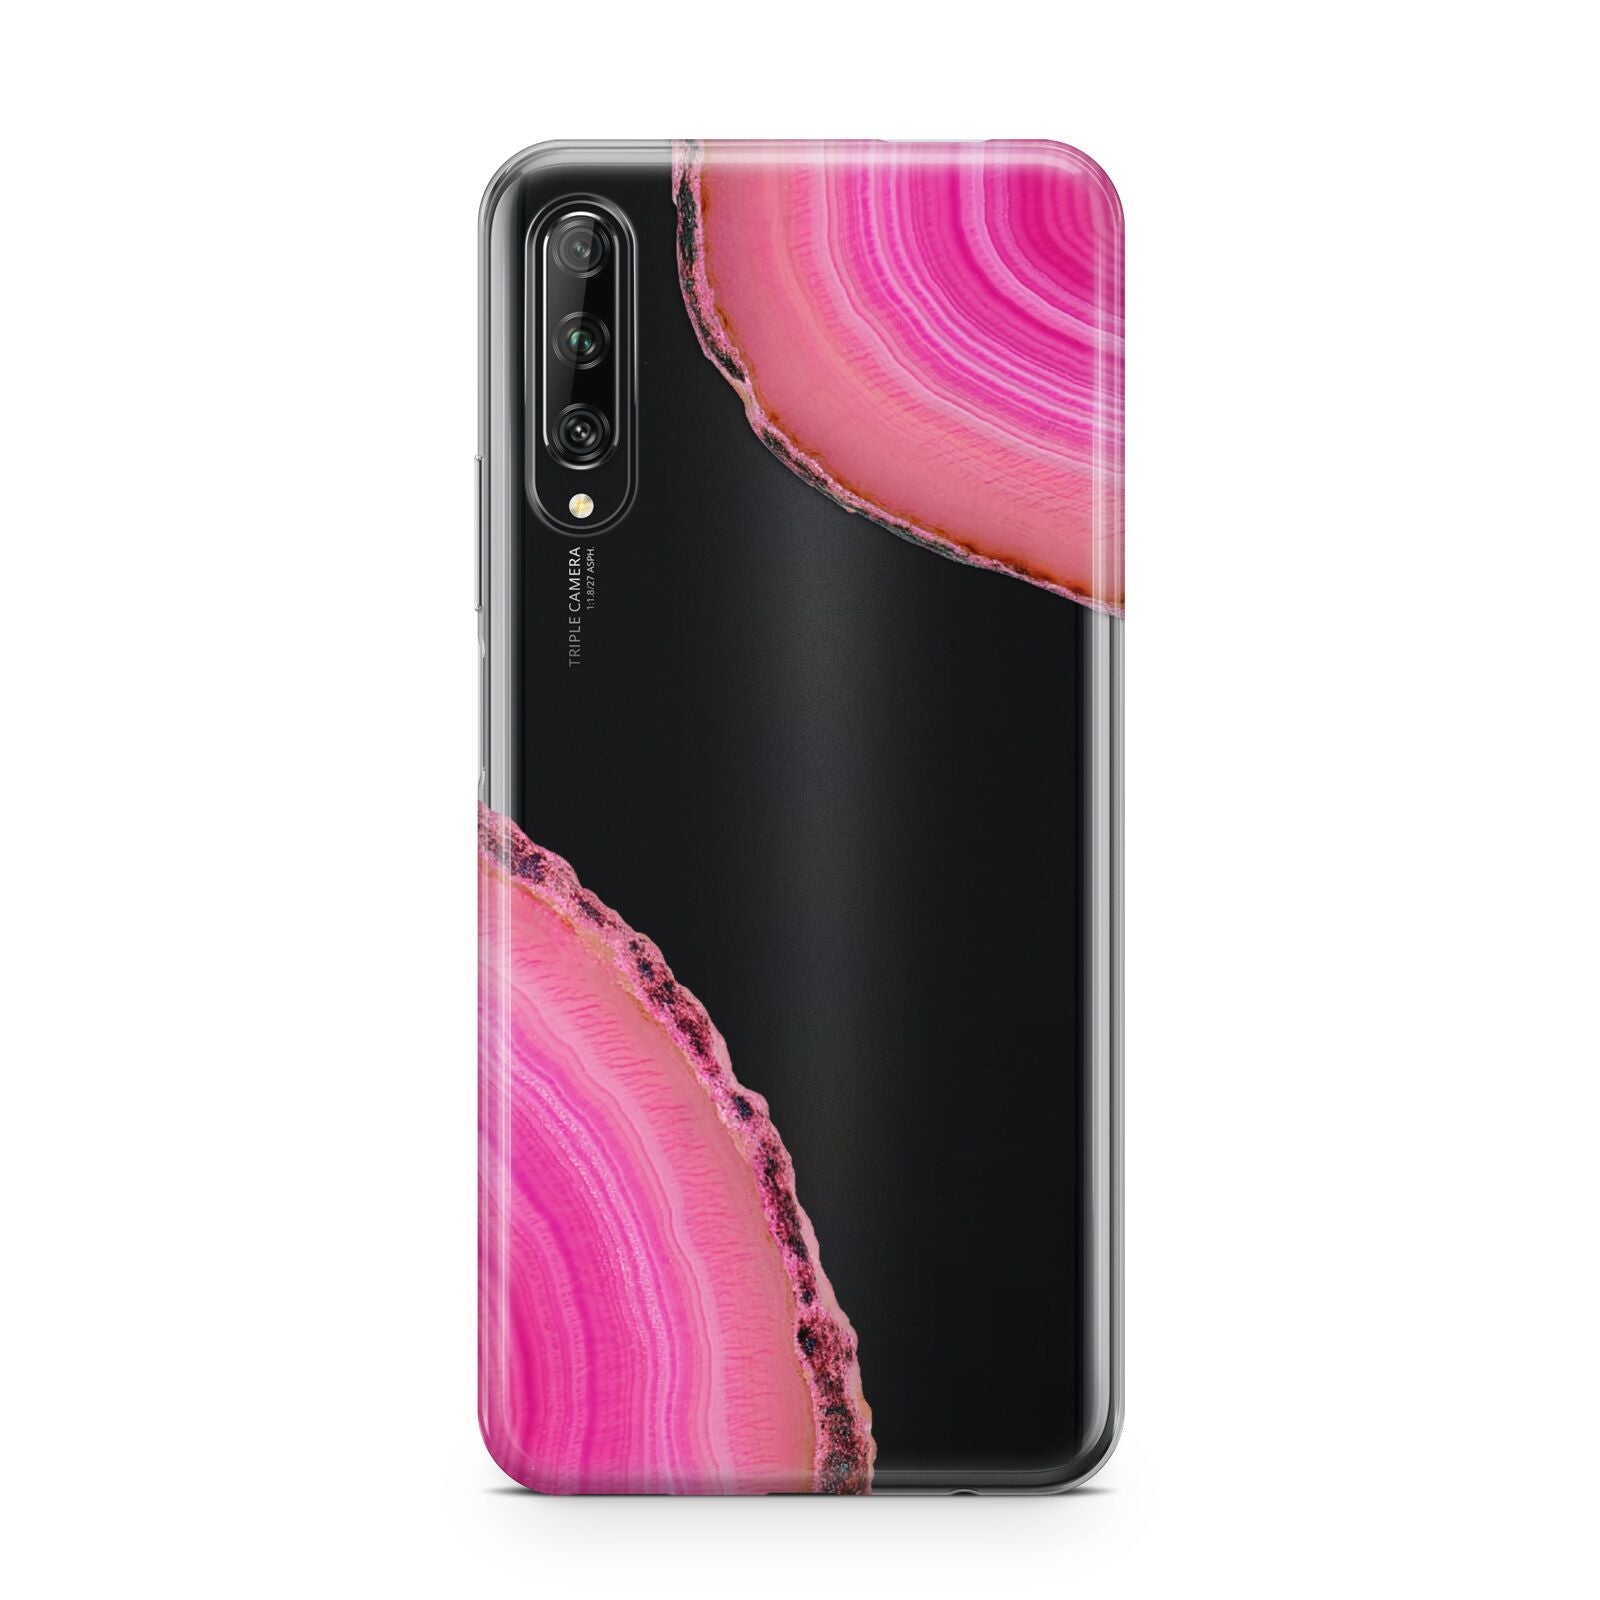 Agate Bright Pink Huawei P Smart Pro 2019